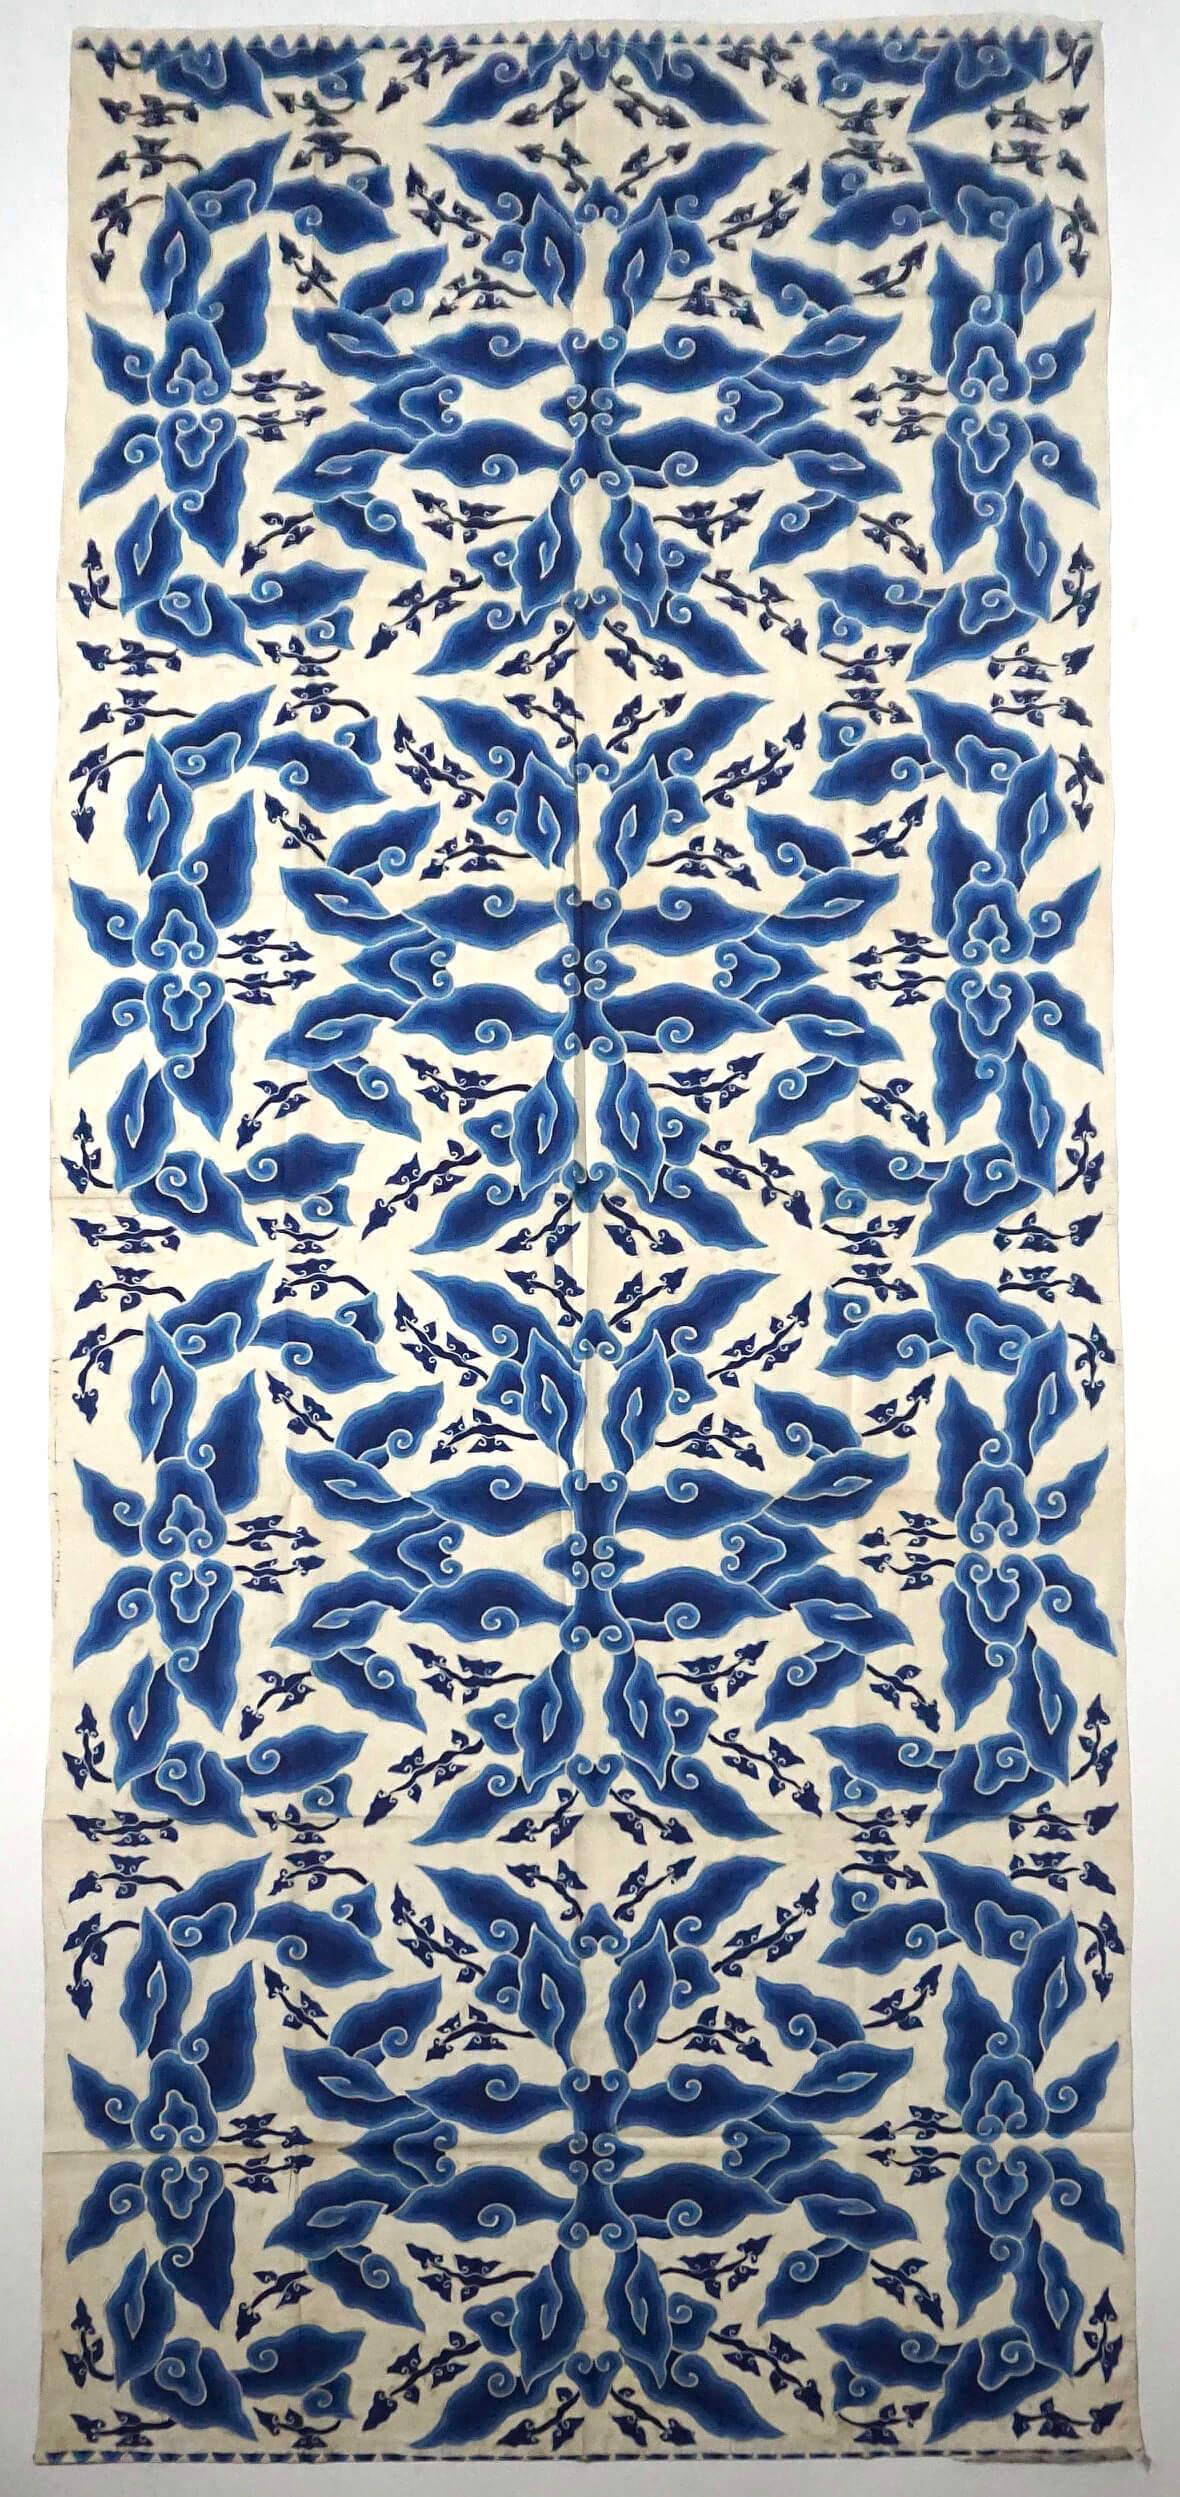 Indonesian Blue & White Megamendung or Clouds Pattern Batik Panel, circa 1930 For Sale 4